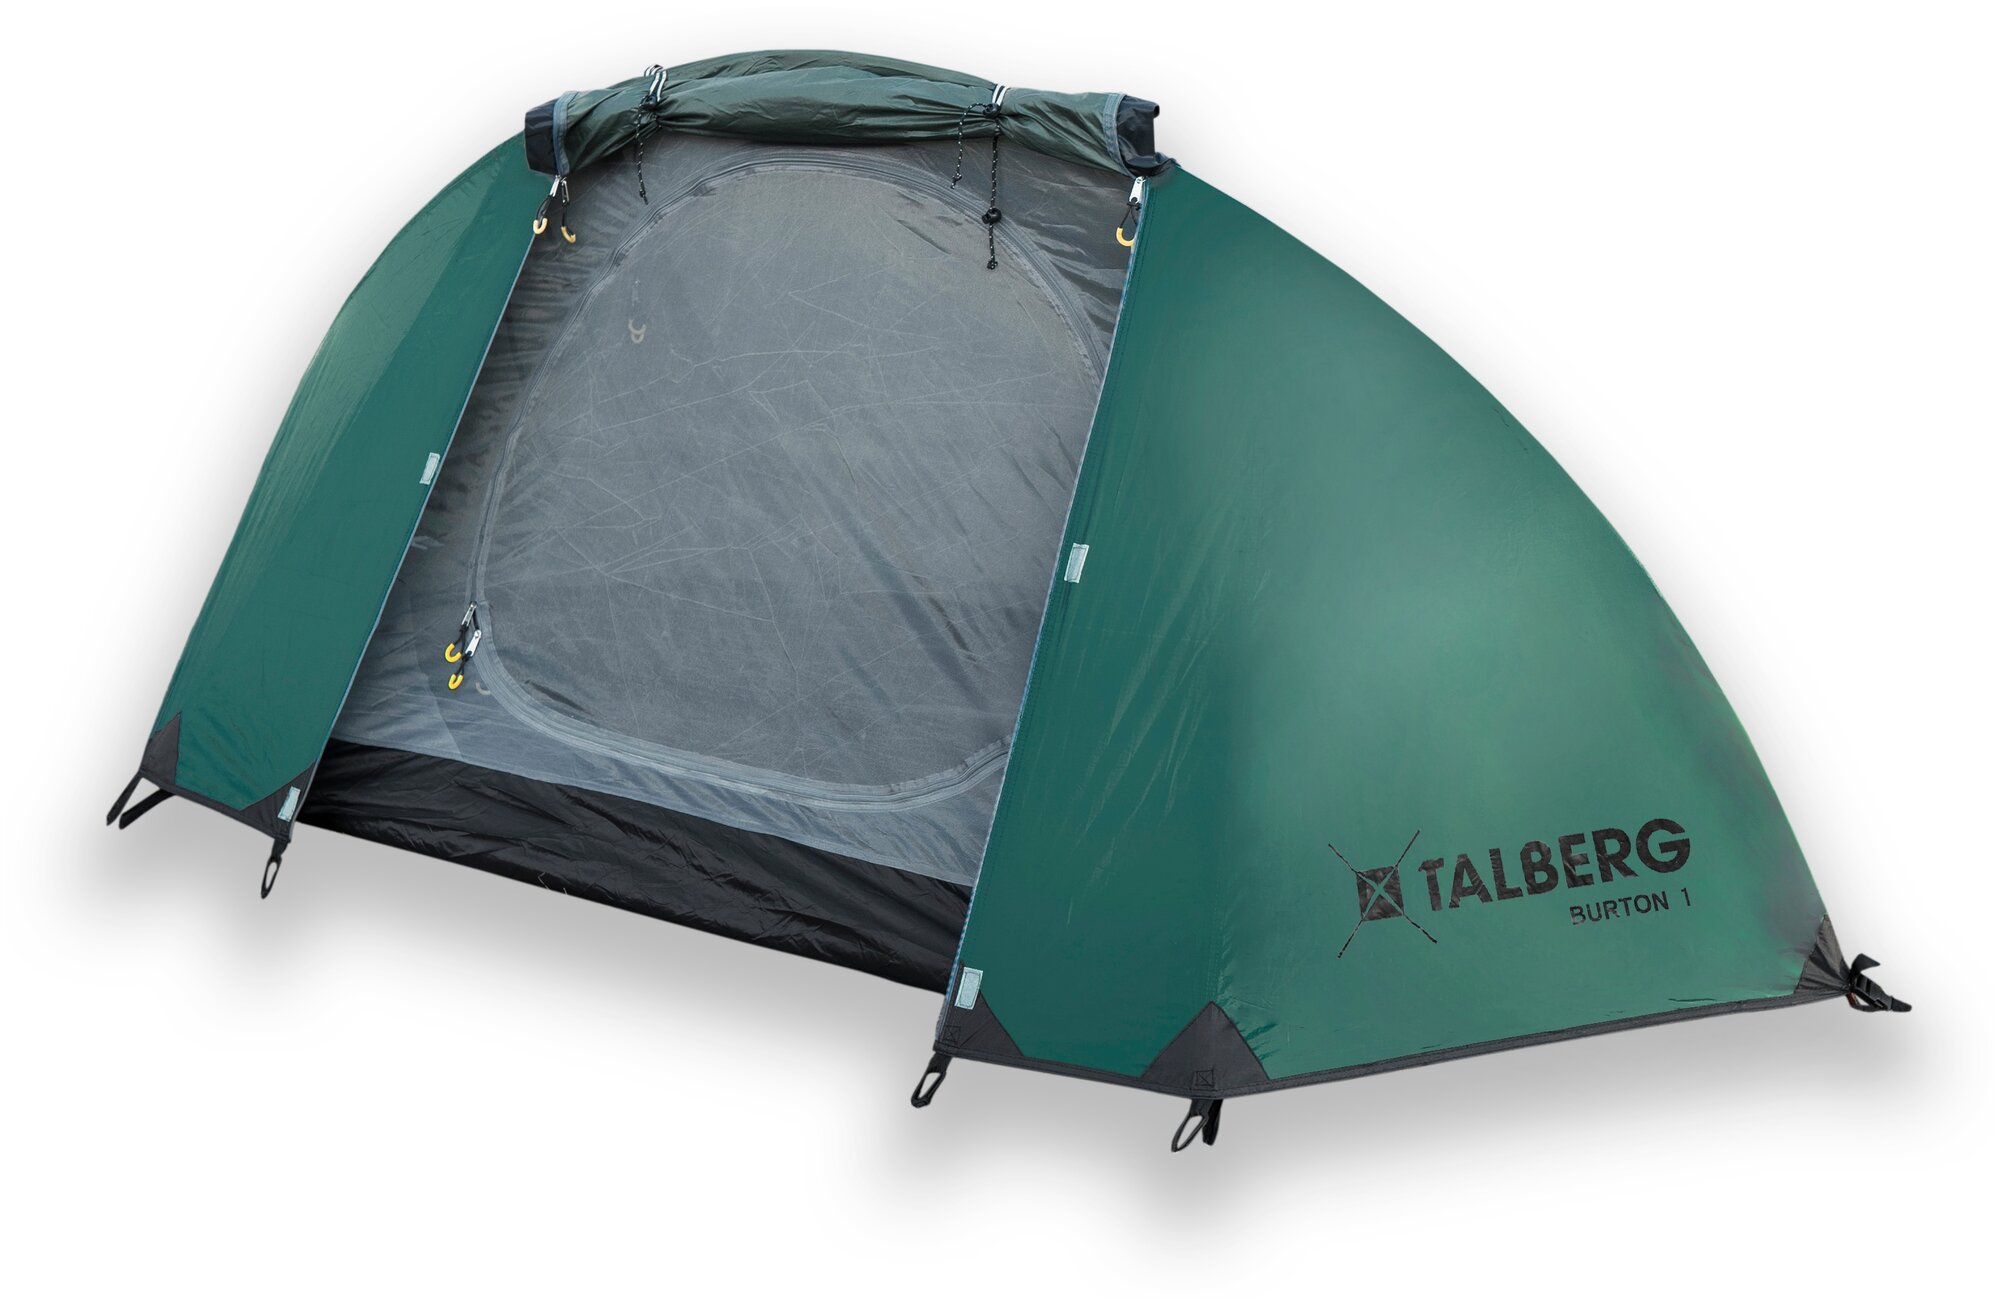 Палатка Talberg BURTON 1 Alu green